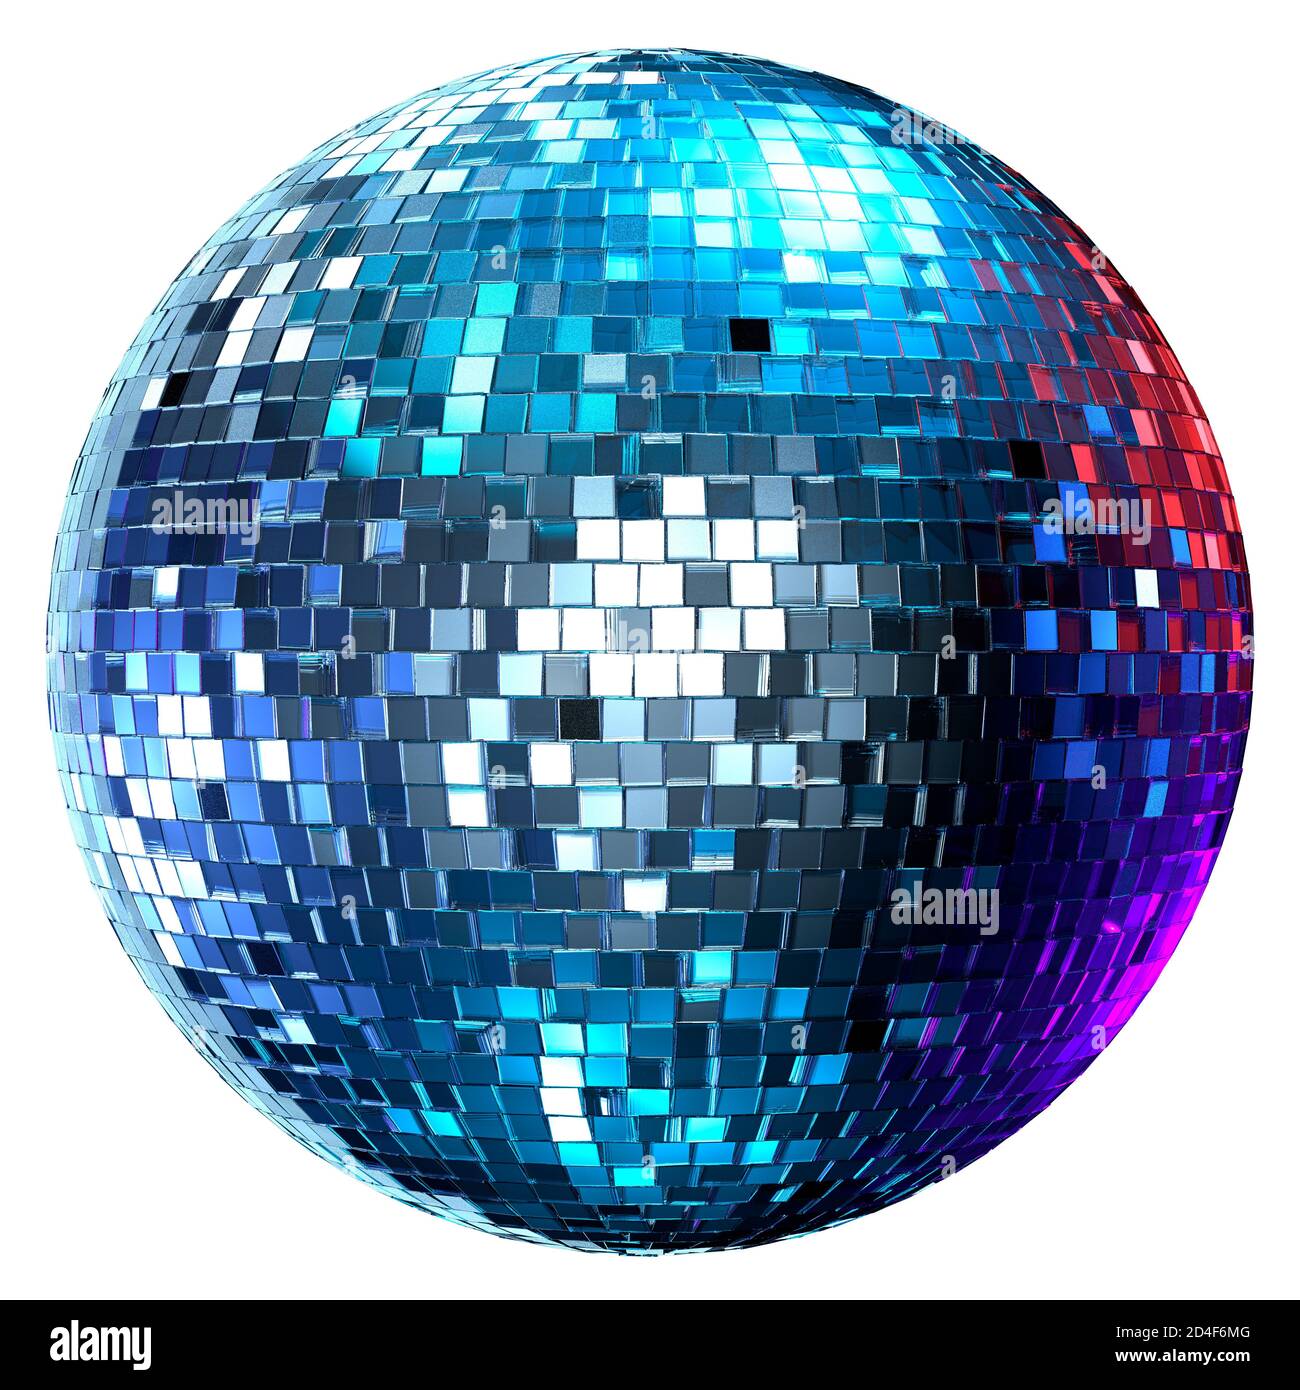 Strictly Come Dancing Mirrorball Disco ball. Discoball. Découpe, arrière-plan blanc. Boîte de nuit. Banque D'Images